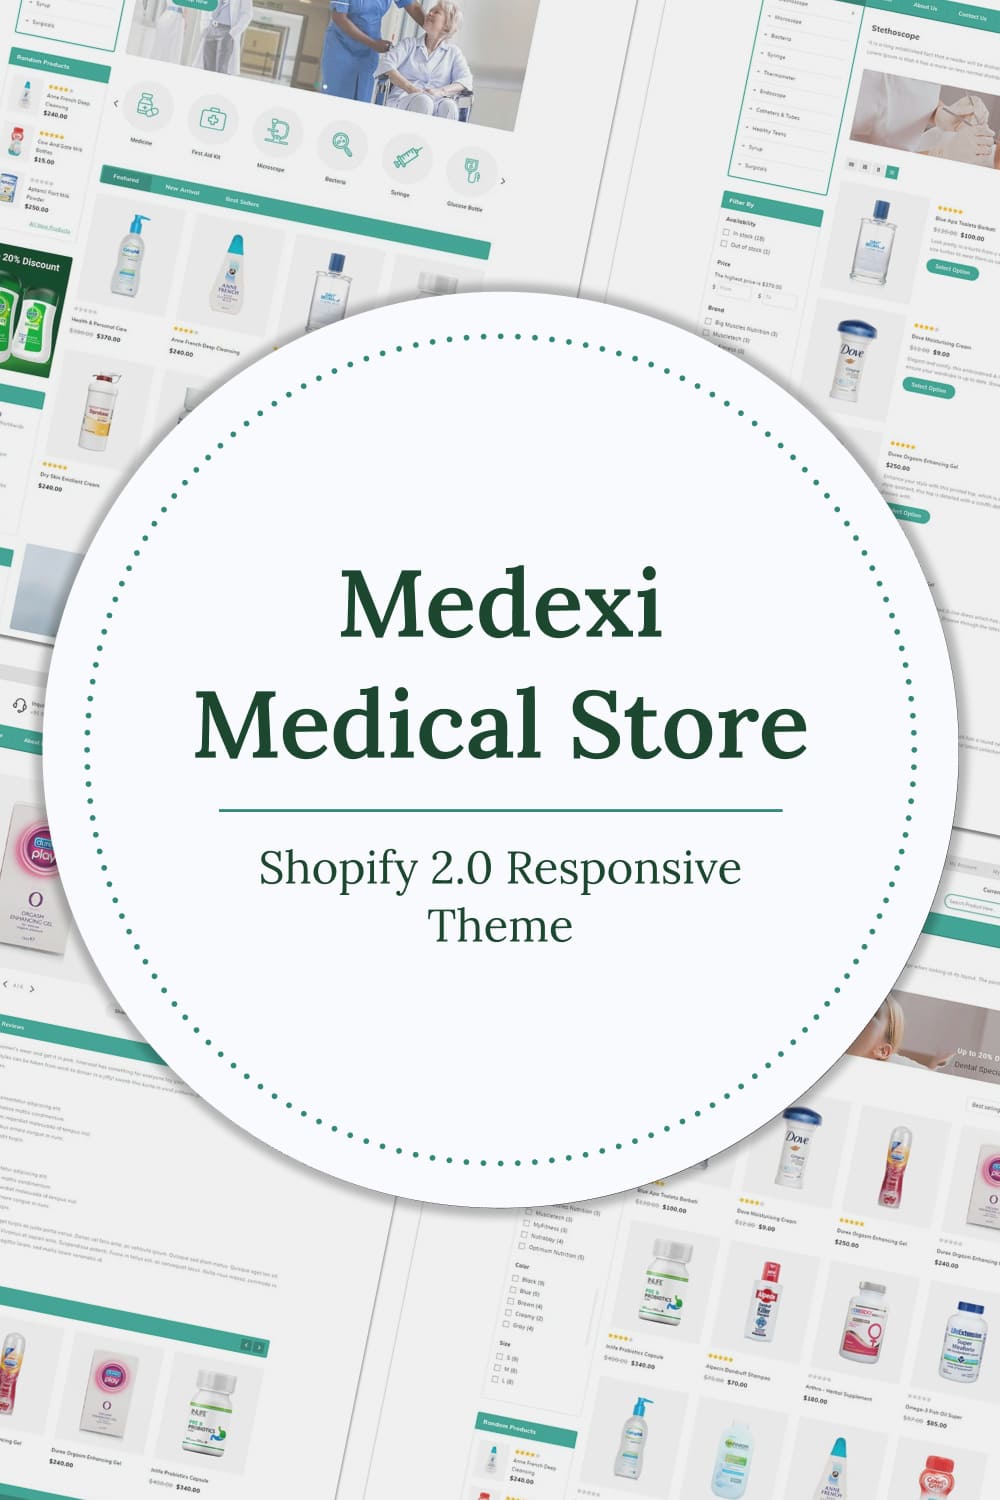 Medexi - Medical Store Shopify 2.0 Responsive Theme - Pinterest.